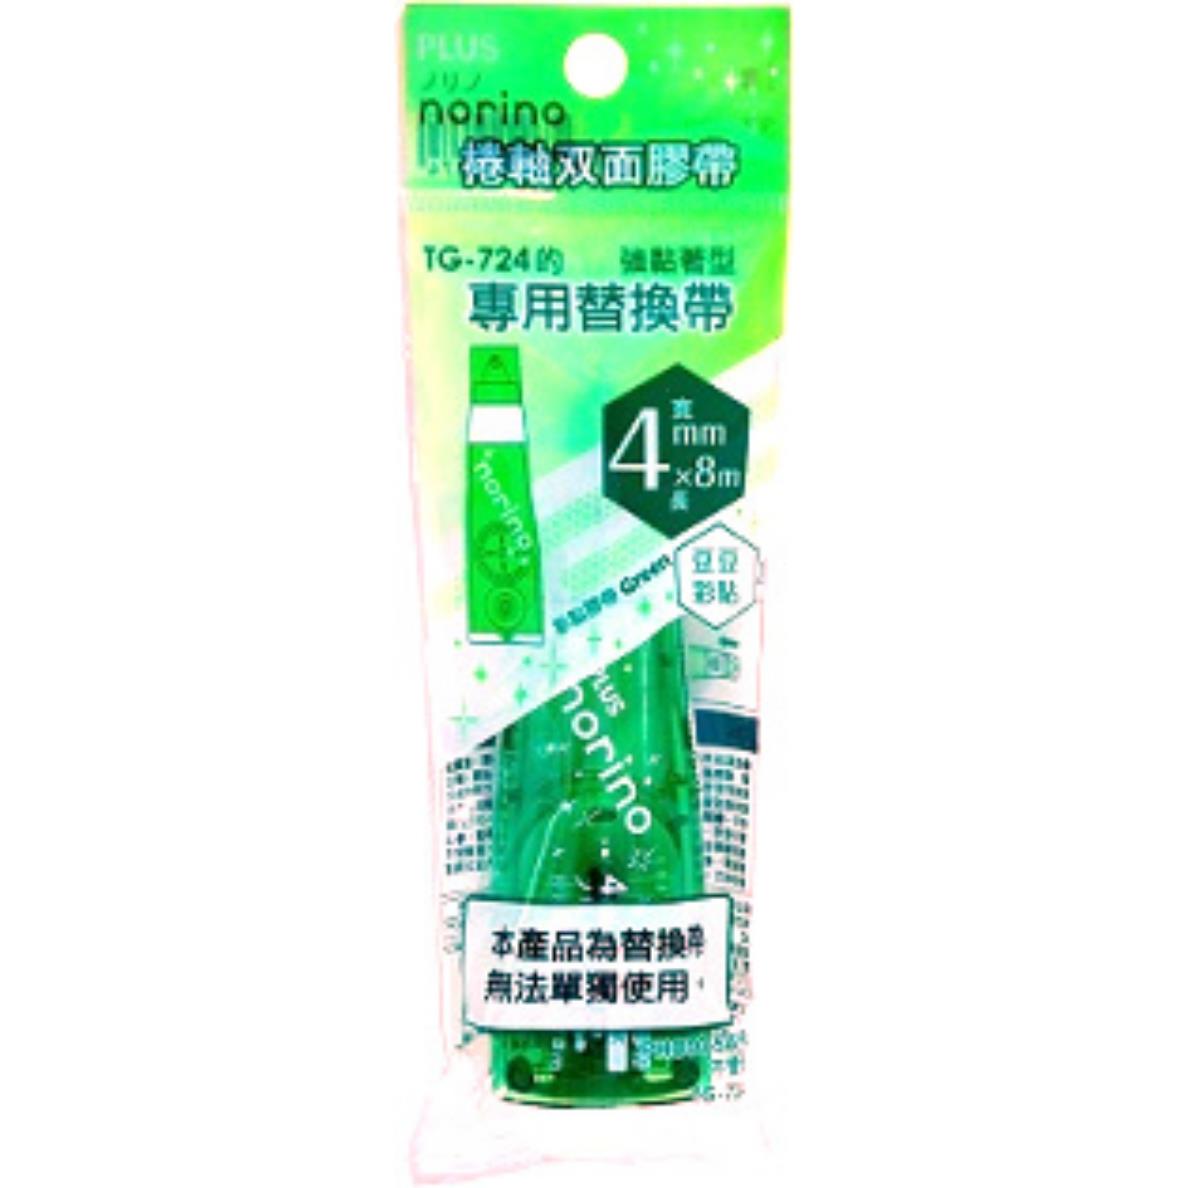 PLUS 豆豆彩貼替帶 (TG-724R   ) (綠)